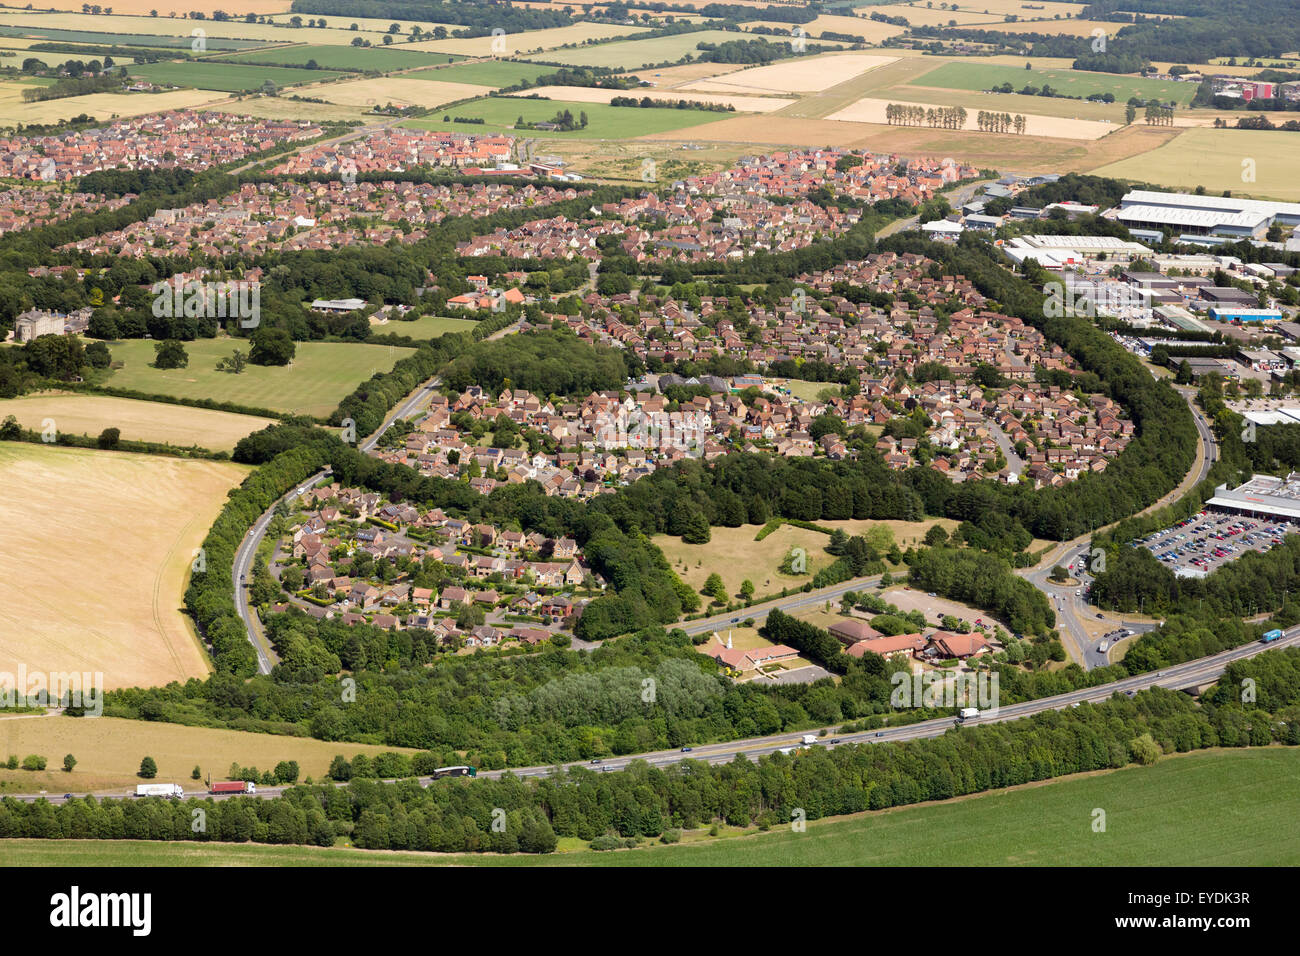 The Moreton Hall housing estate in Bury St Edmunds, Suffolk, UK Stock Photo